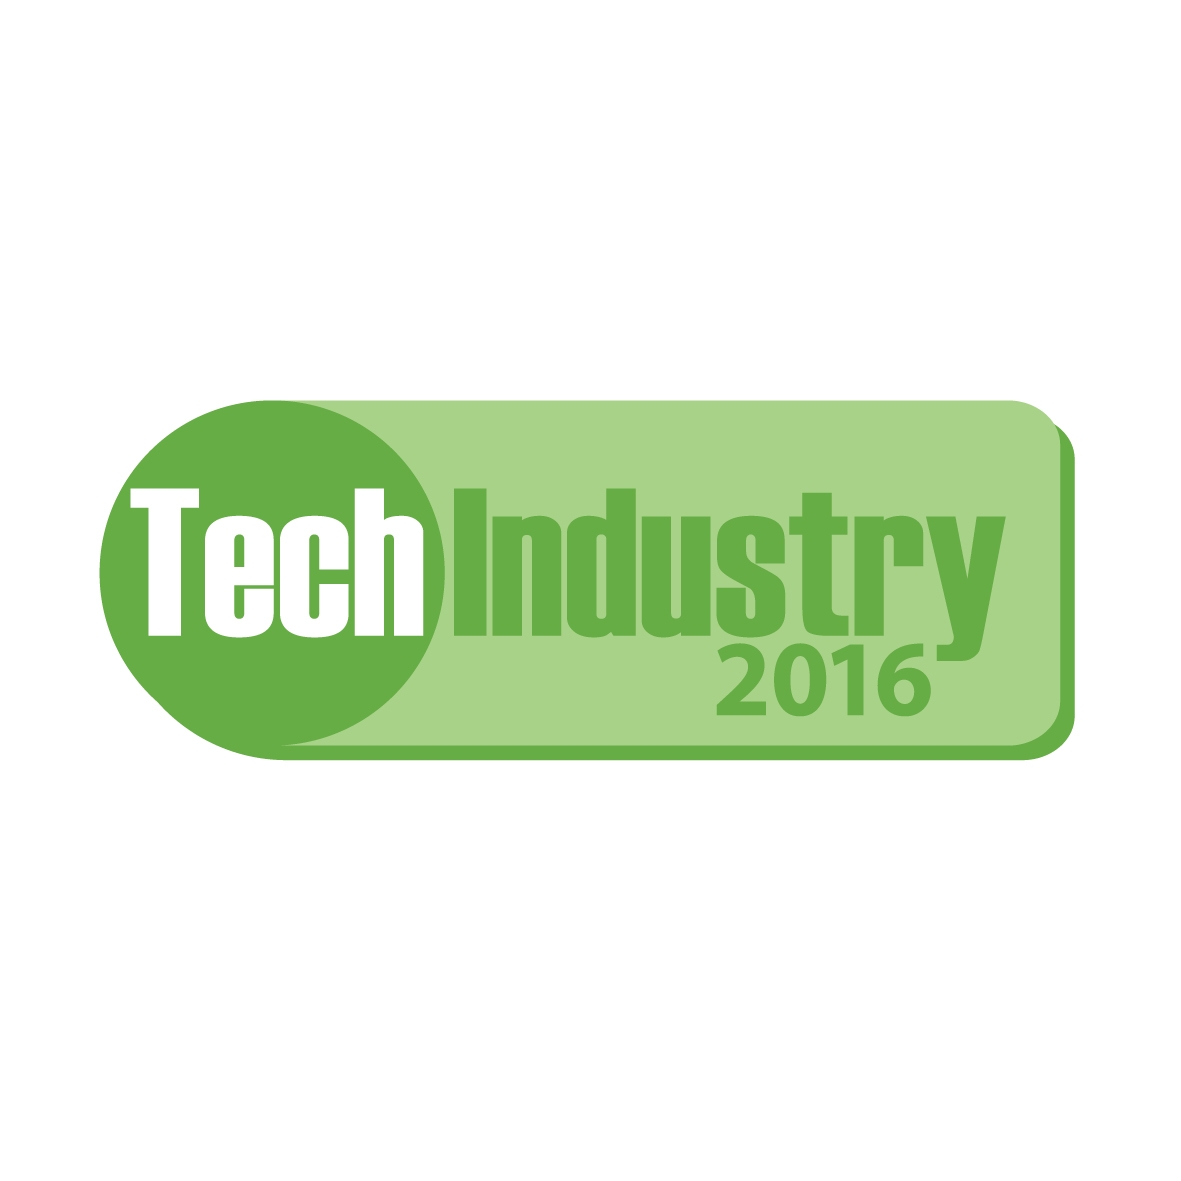 International Brokerage Event at Tech Industry 2016